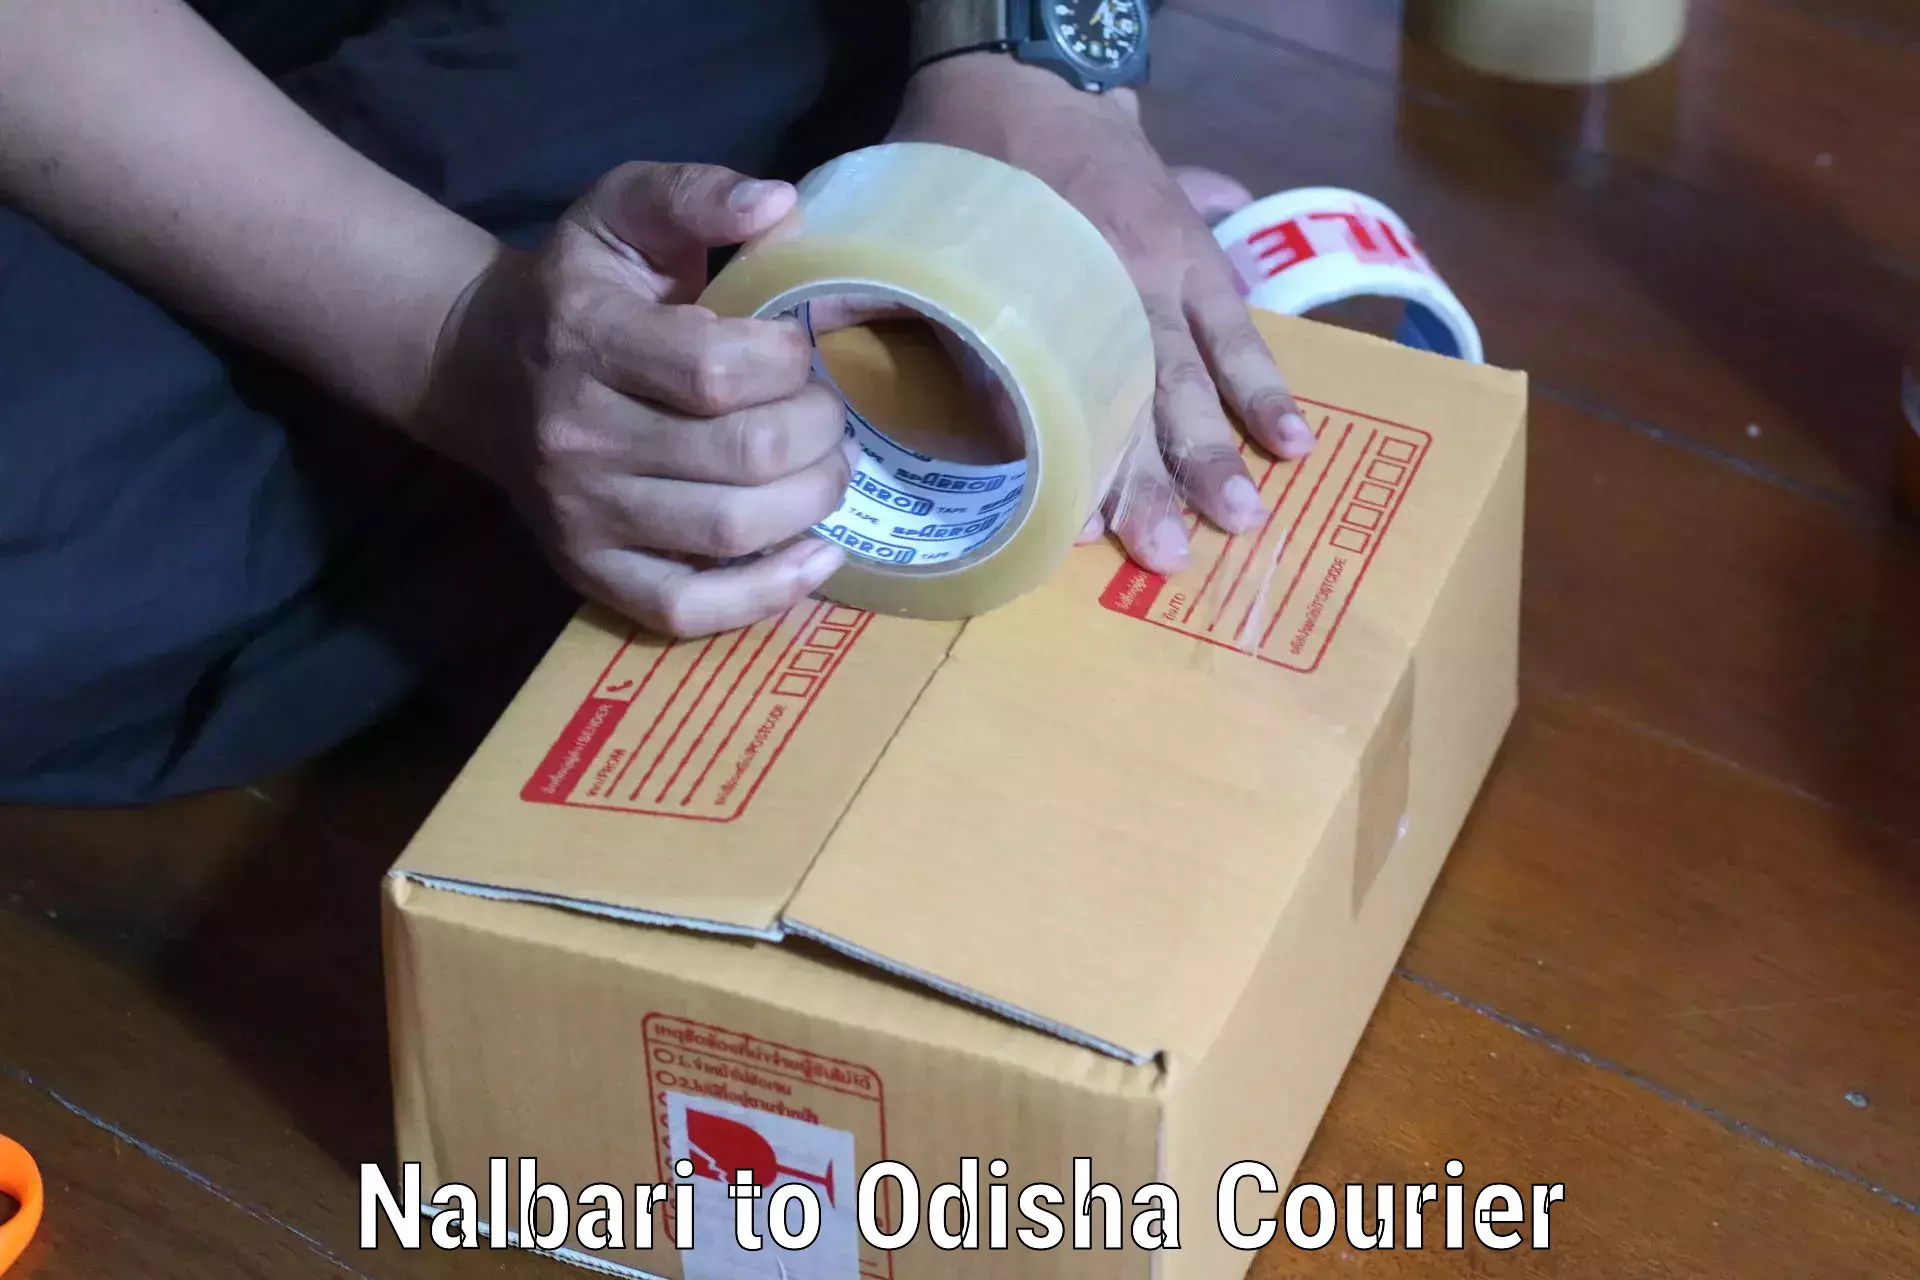 Efficient courier operations Nalbari to Agarpada